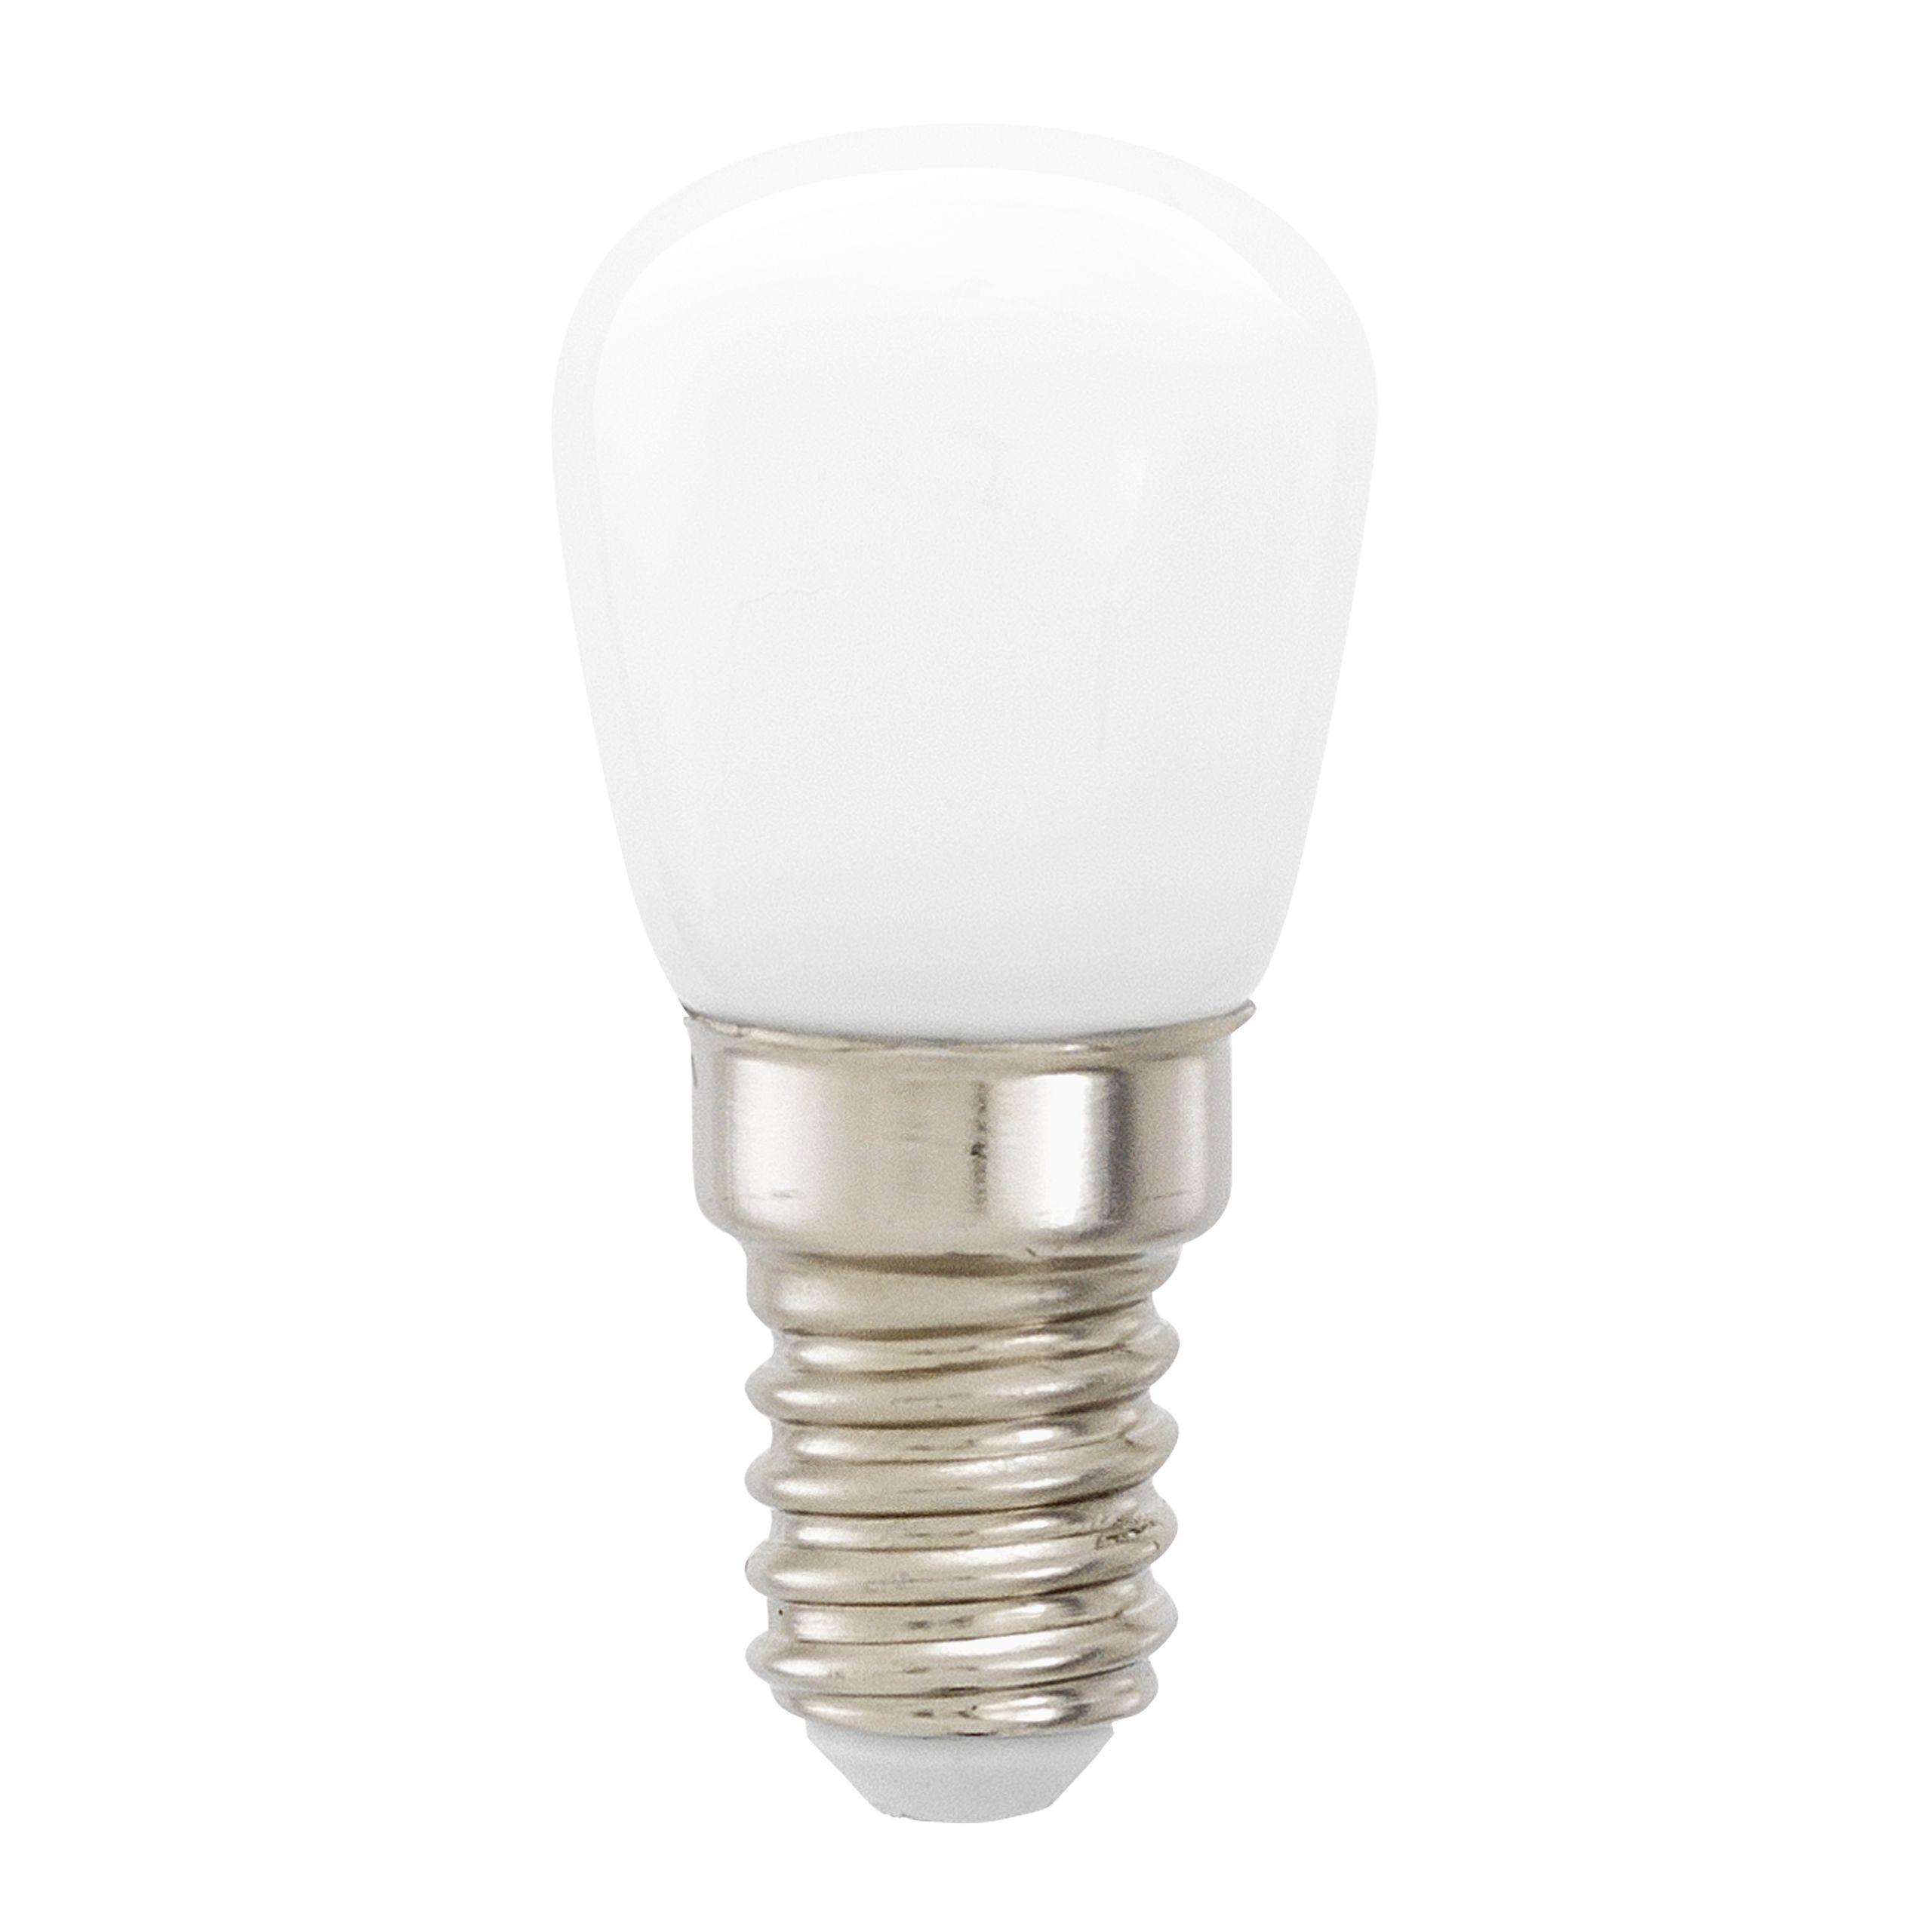 Купить Лампочка LED Fridge Bulb 3W E14 set of 4 в интернет-магазине roooms.ru